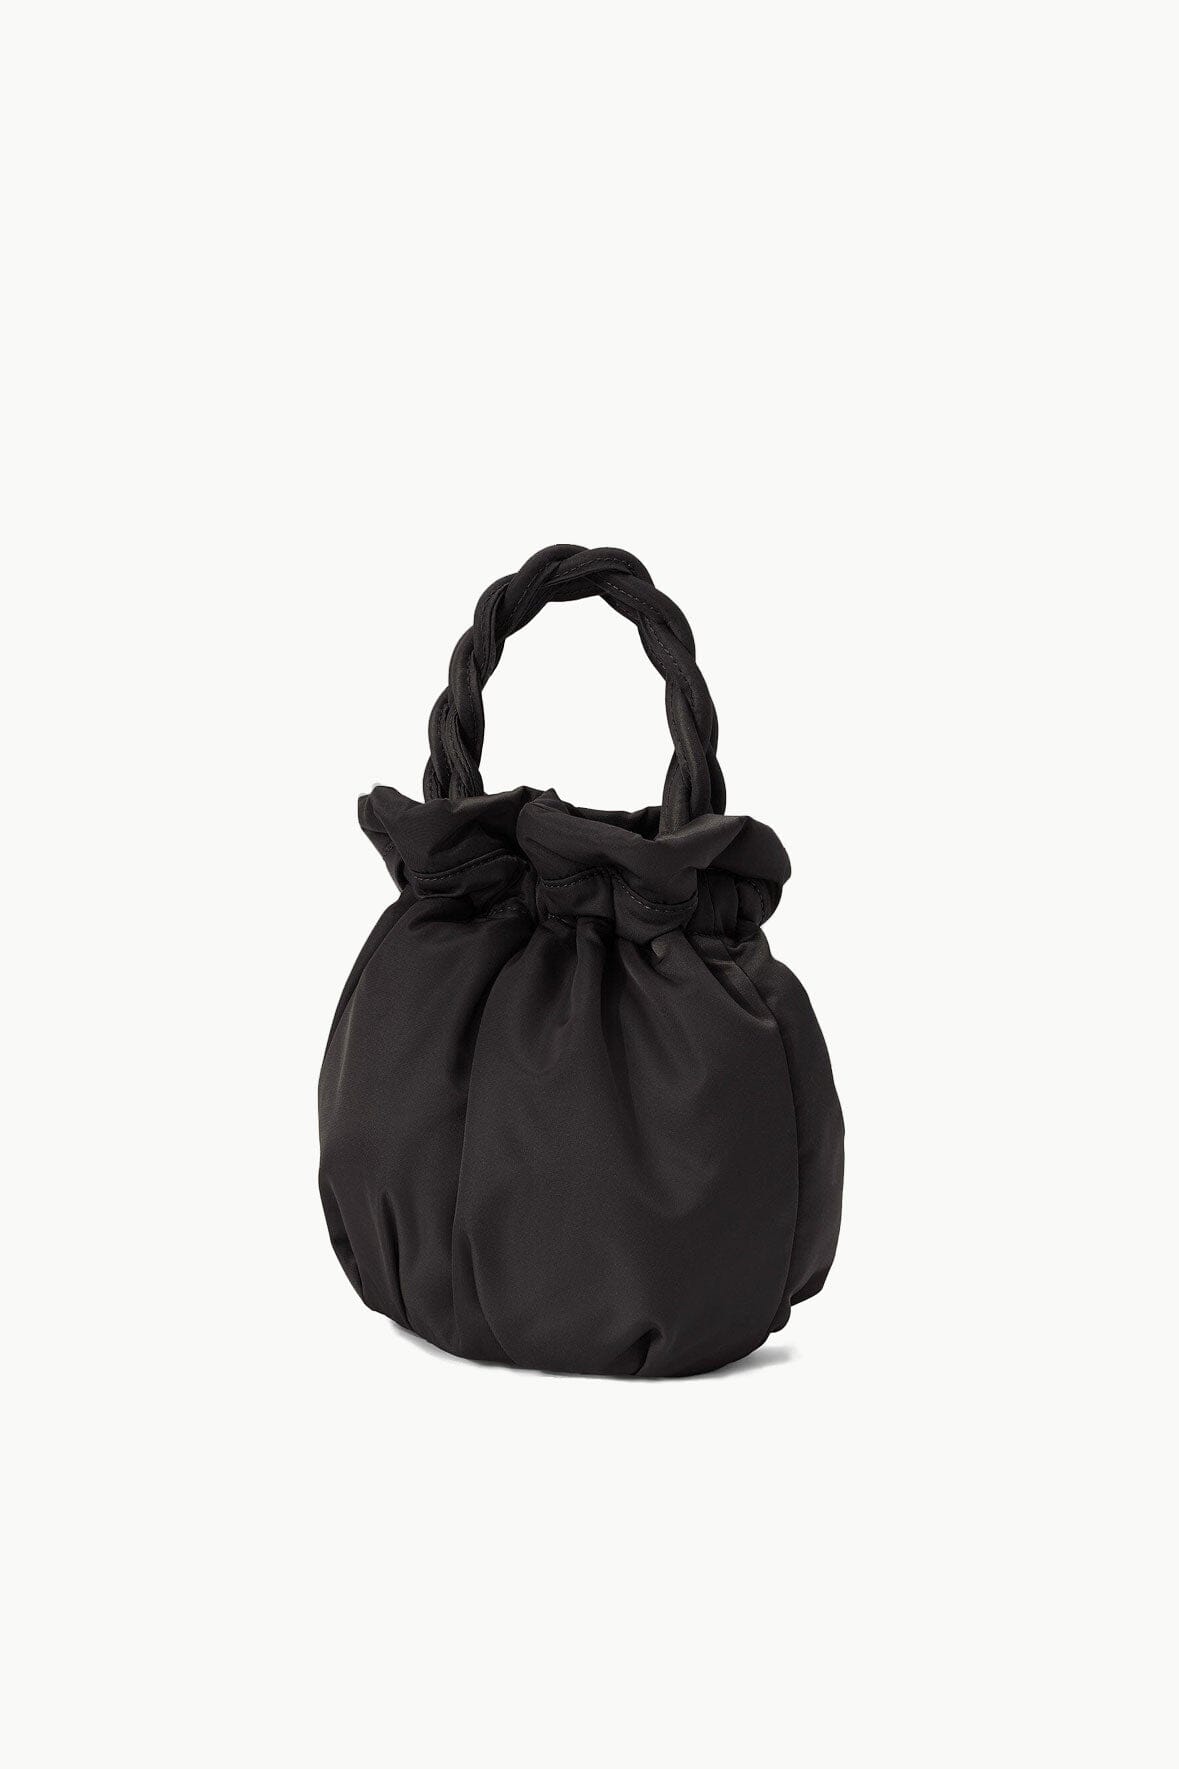 hot bag alert: Staud Grace Bag  black patent leather bucket bag